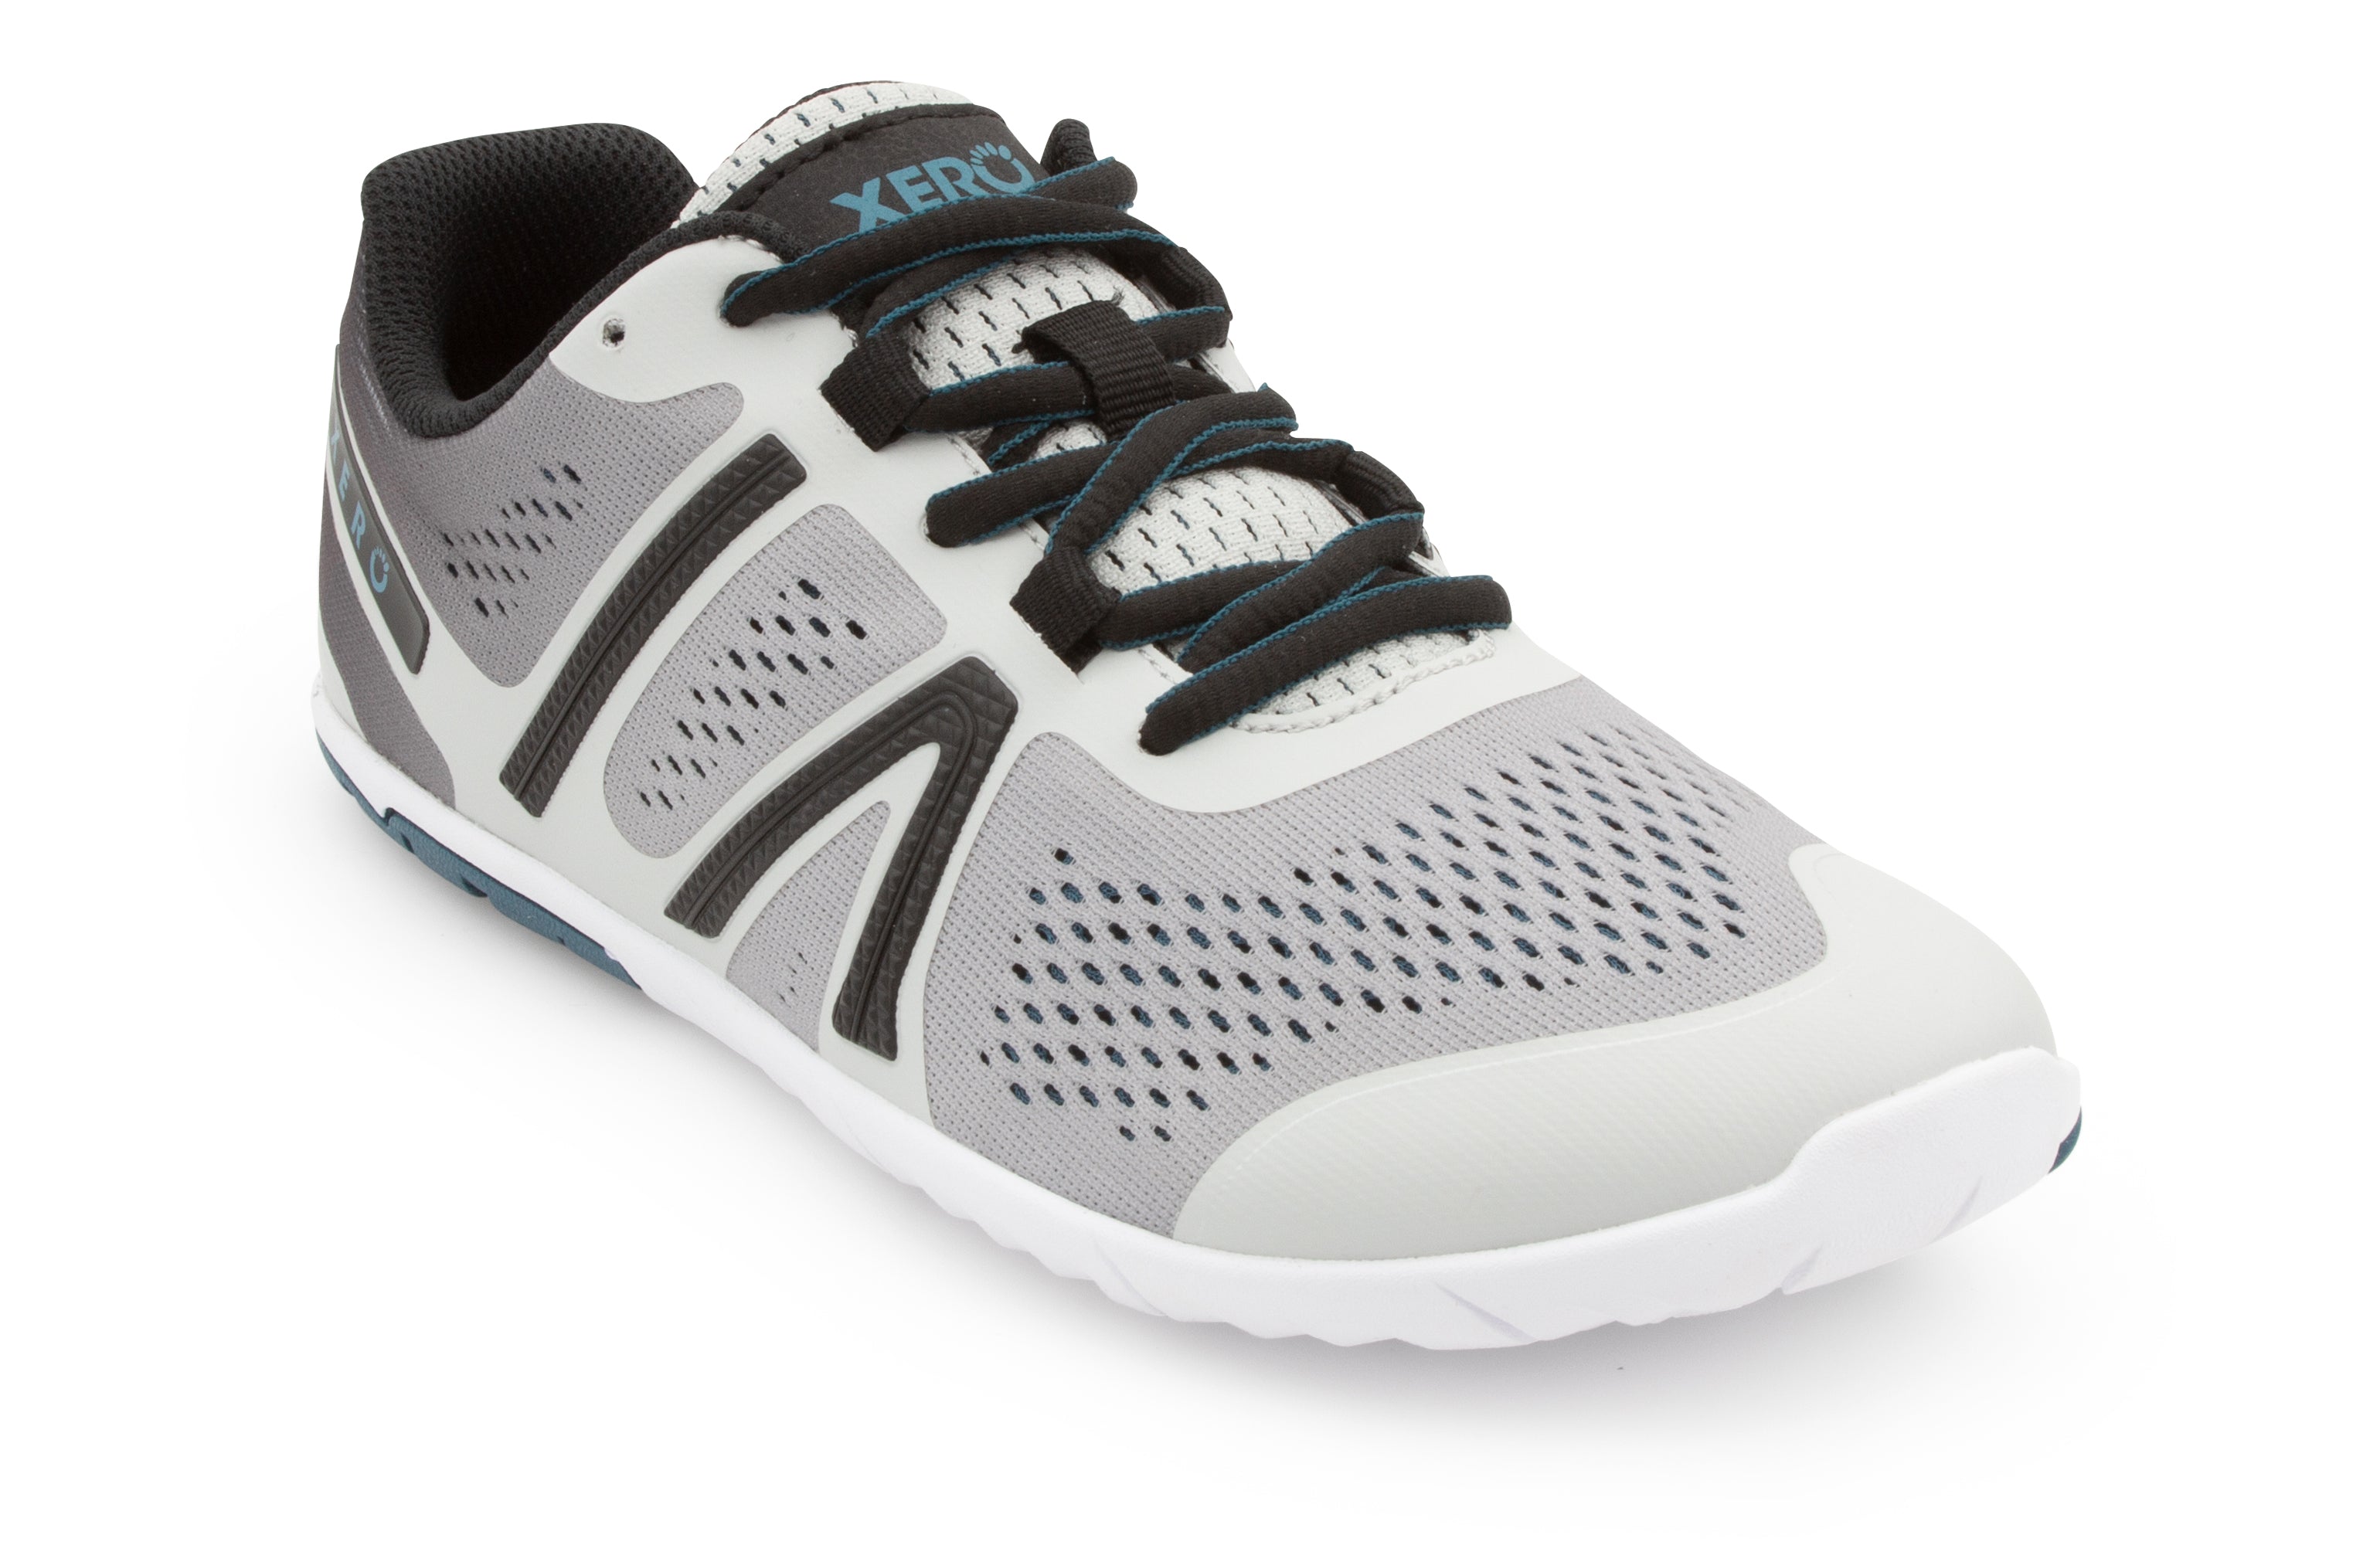 Xero Shoes HFS Womens barfods træningssko/løbesko til kvinder i farven aurora gray, vinklet